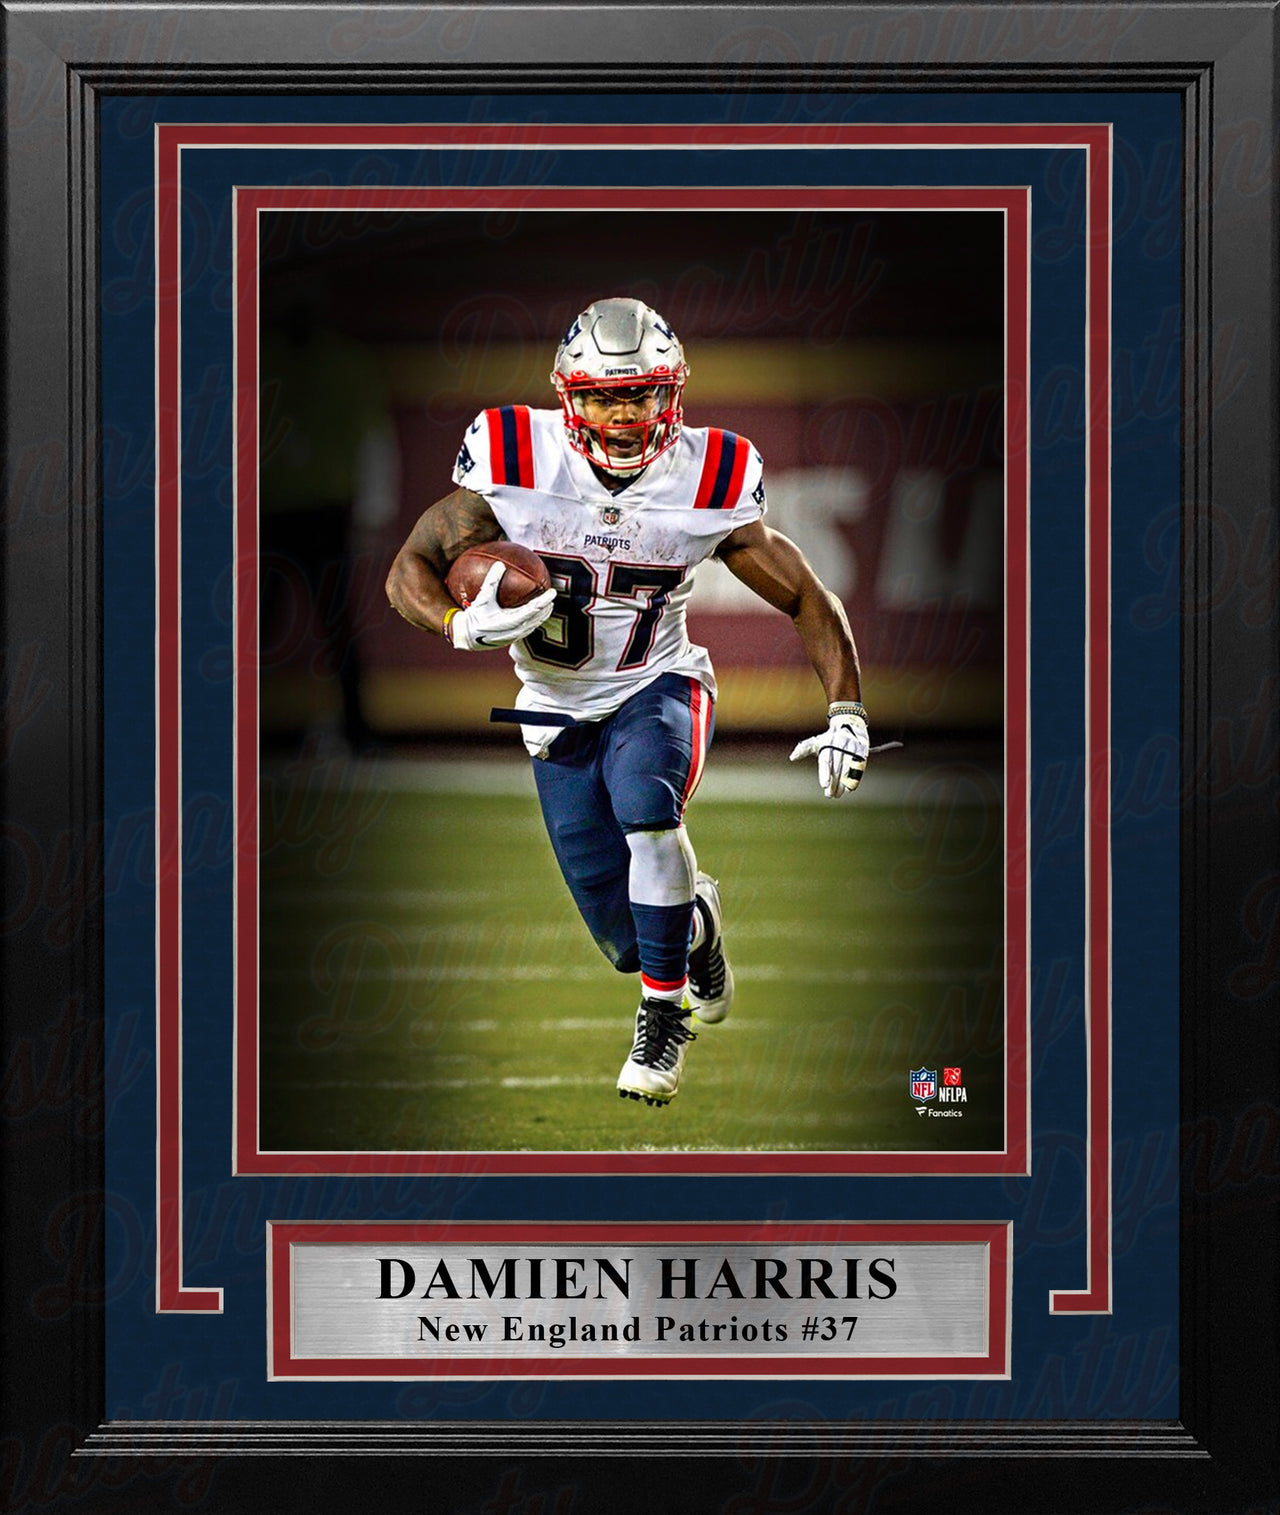 Damien Harris Blackout Action New England Patriots 8" x 10" Framed Football Photo - Dynasty Sports & Framing 